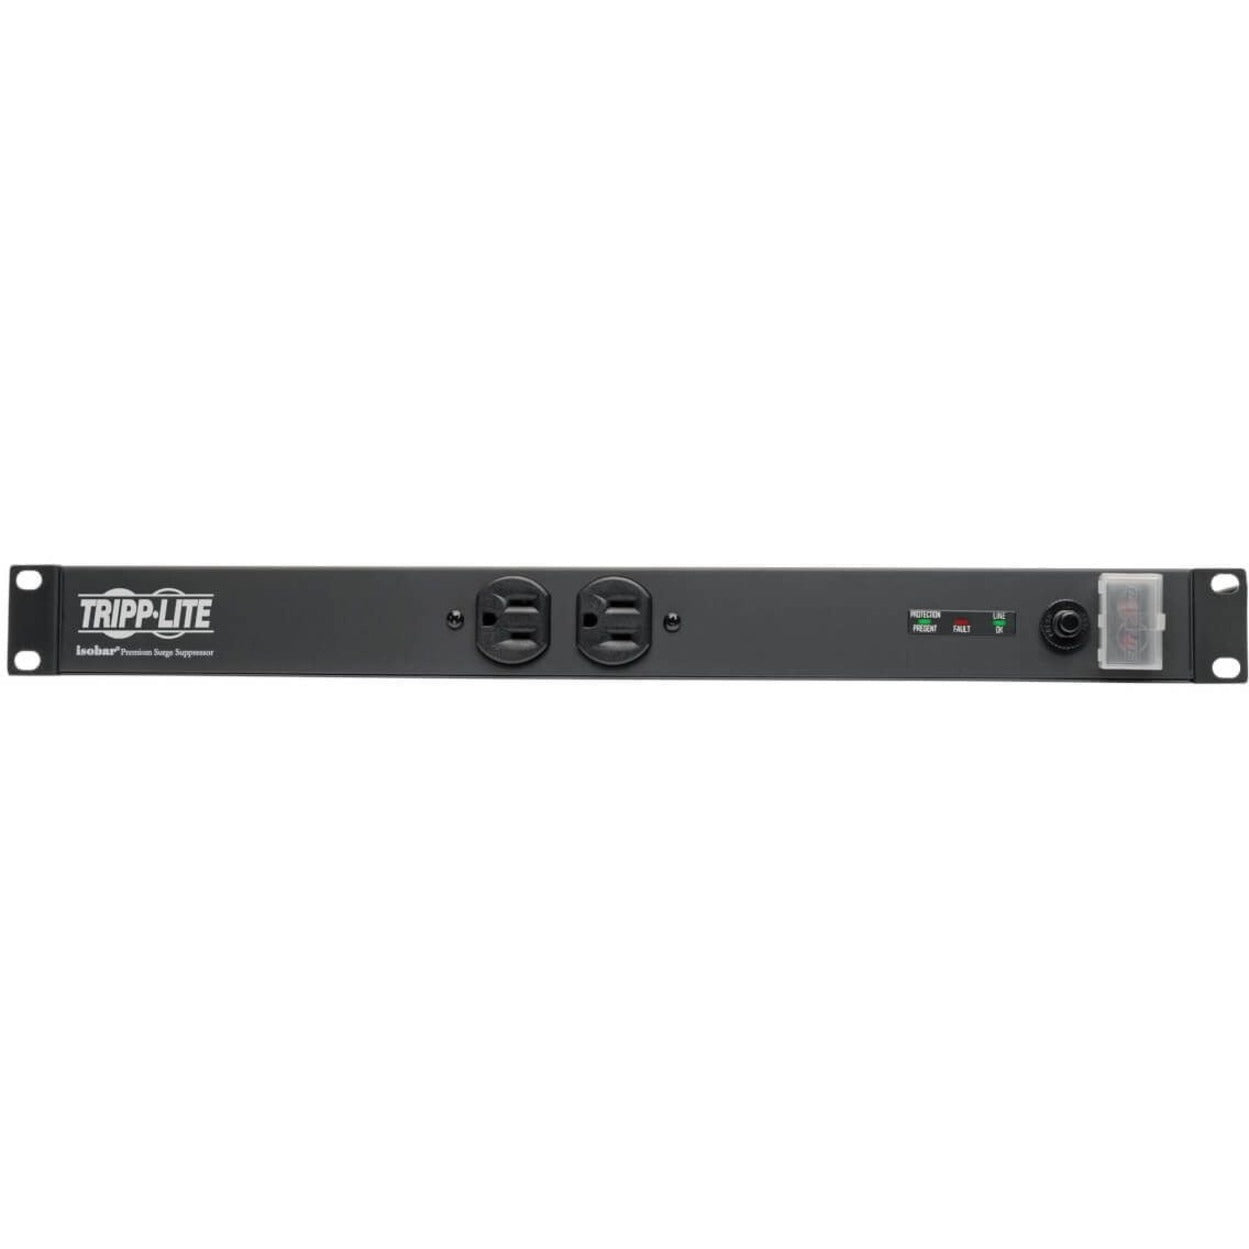 Tripp Lite Isobar 12-Outlet Network Server Surge Protector 15 ft. (4.57 m) Cord 3840 Joules Diagnostic LEDs 1U Rackmount Metal Housing